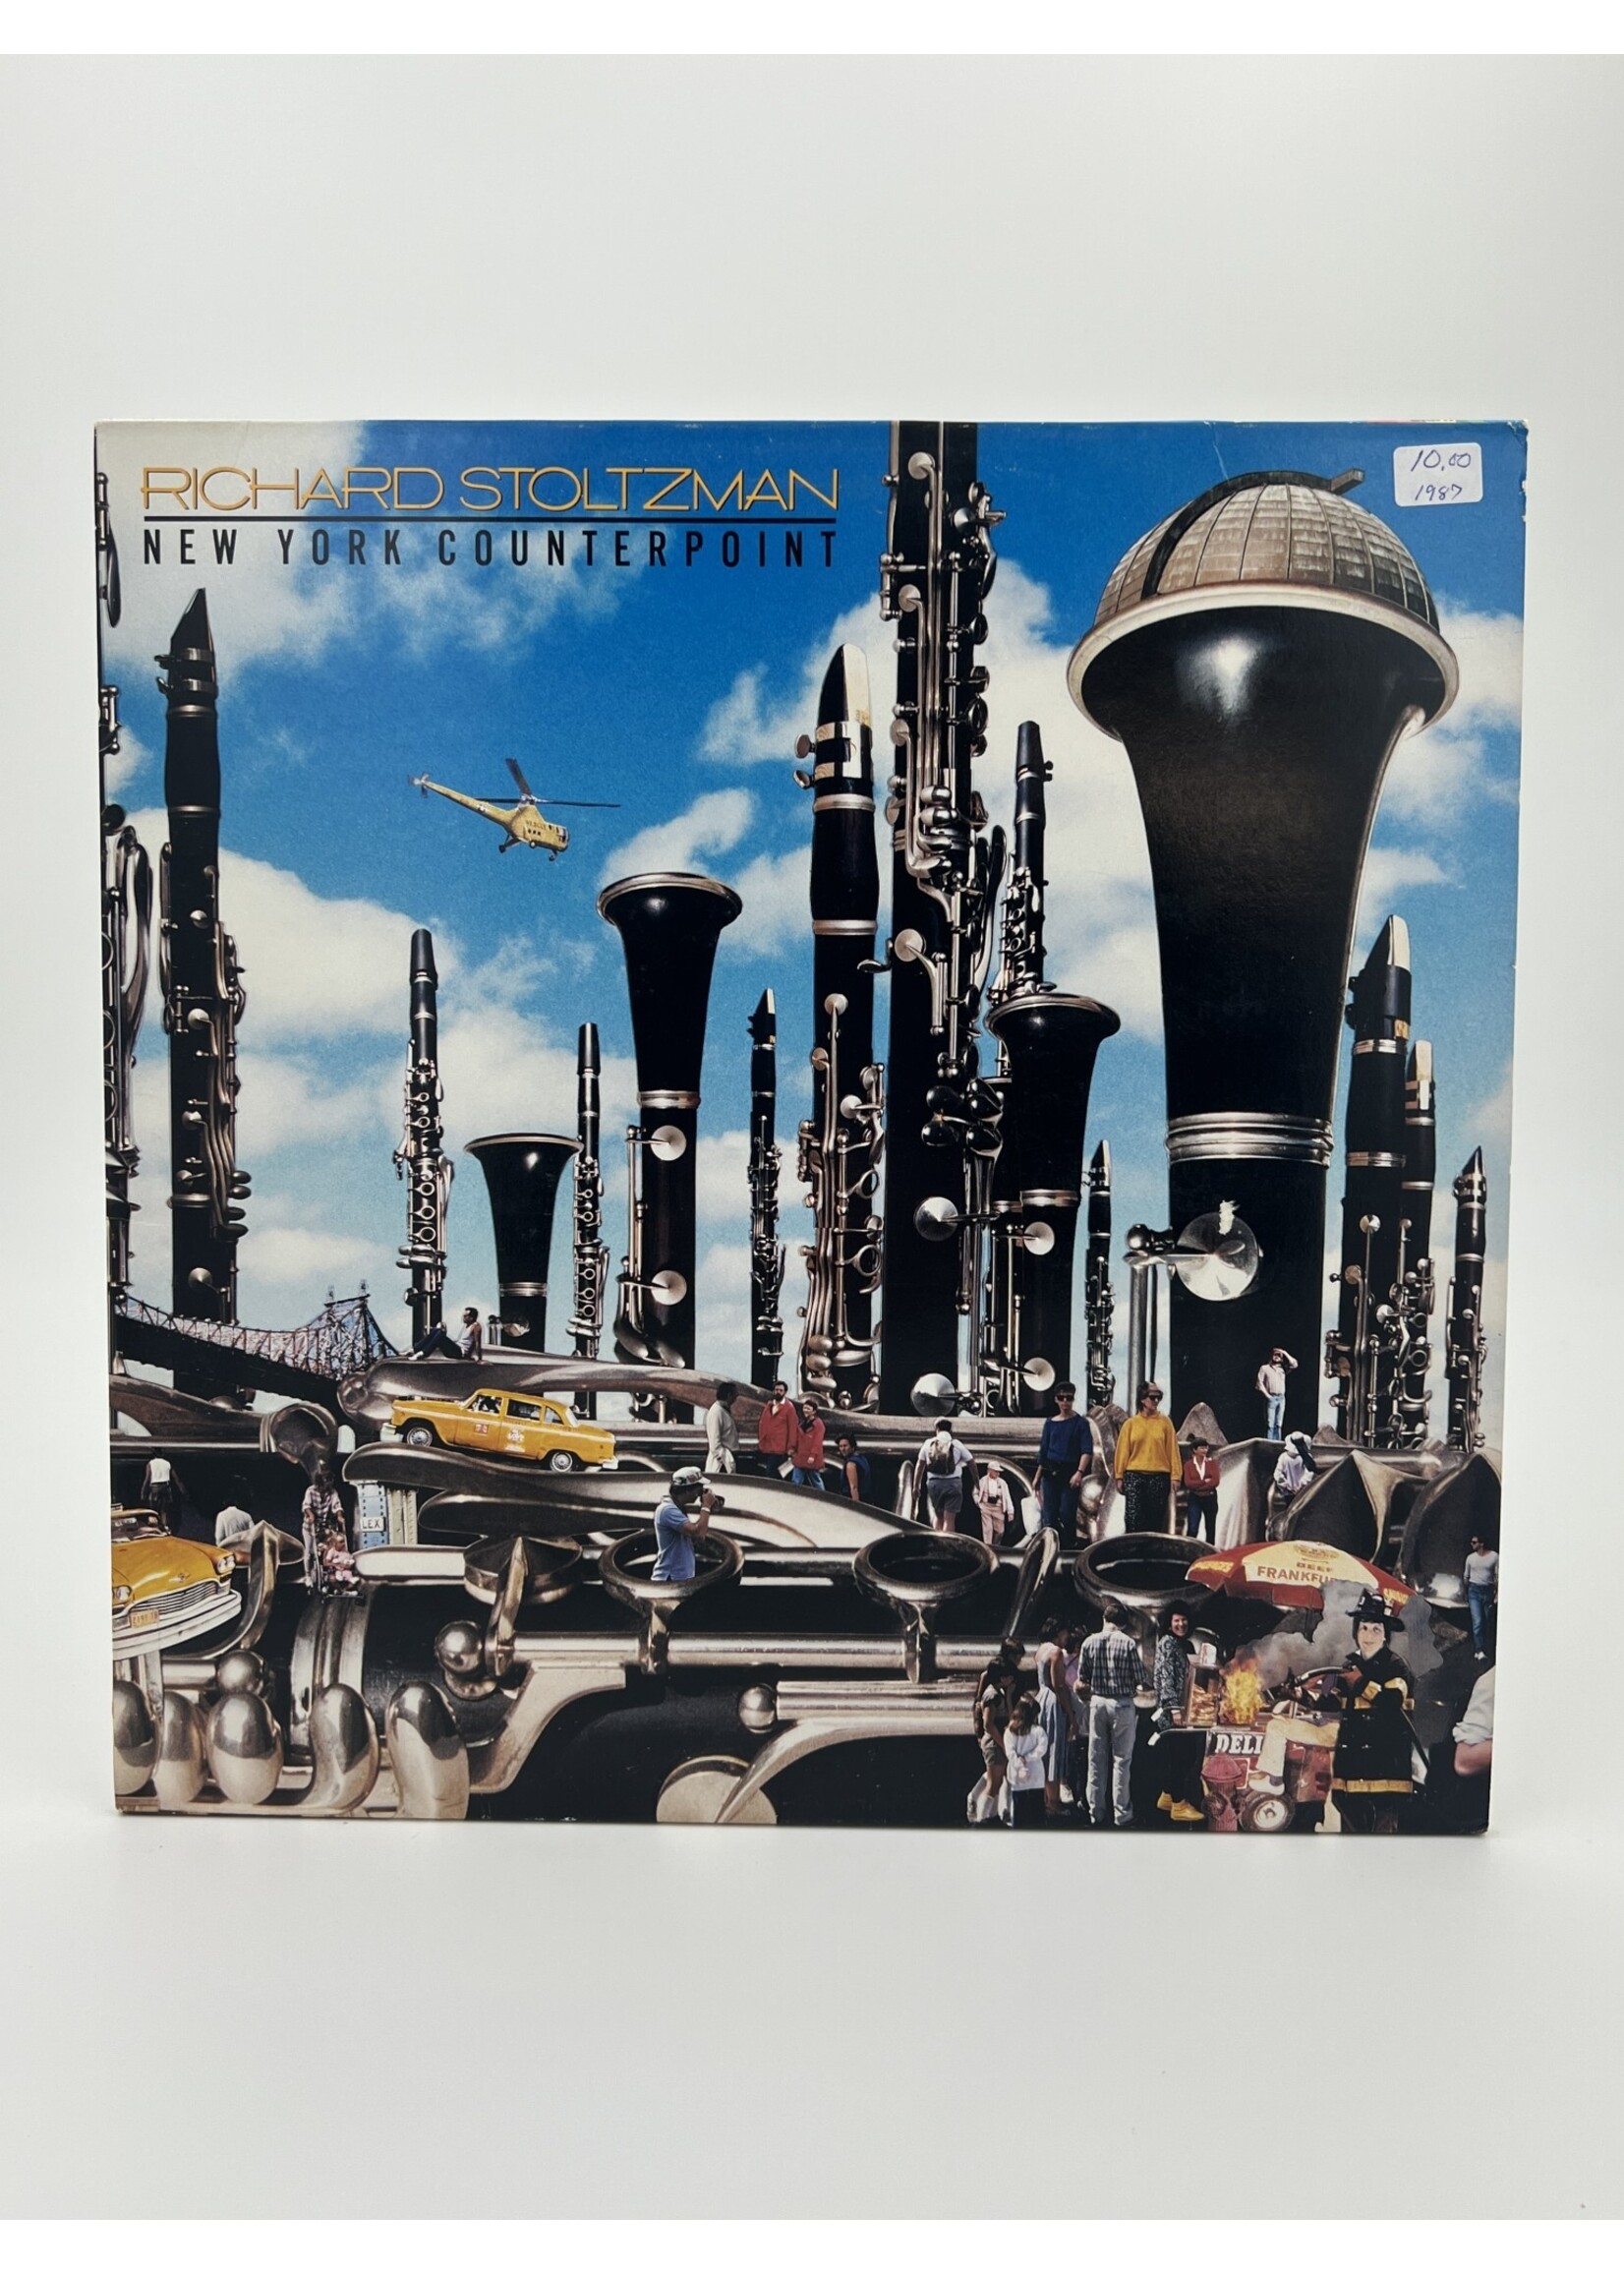 LP   Richard Stoltzman New York Counterpoint LP Record